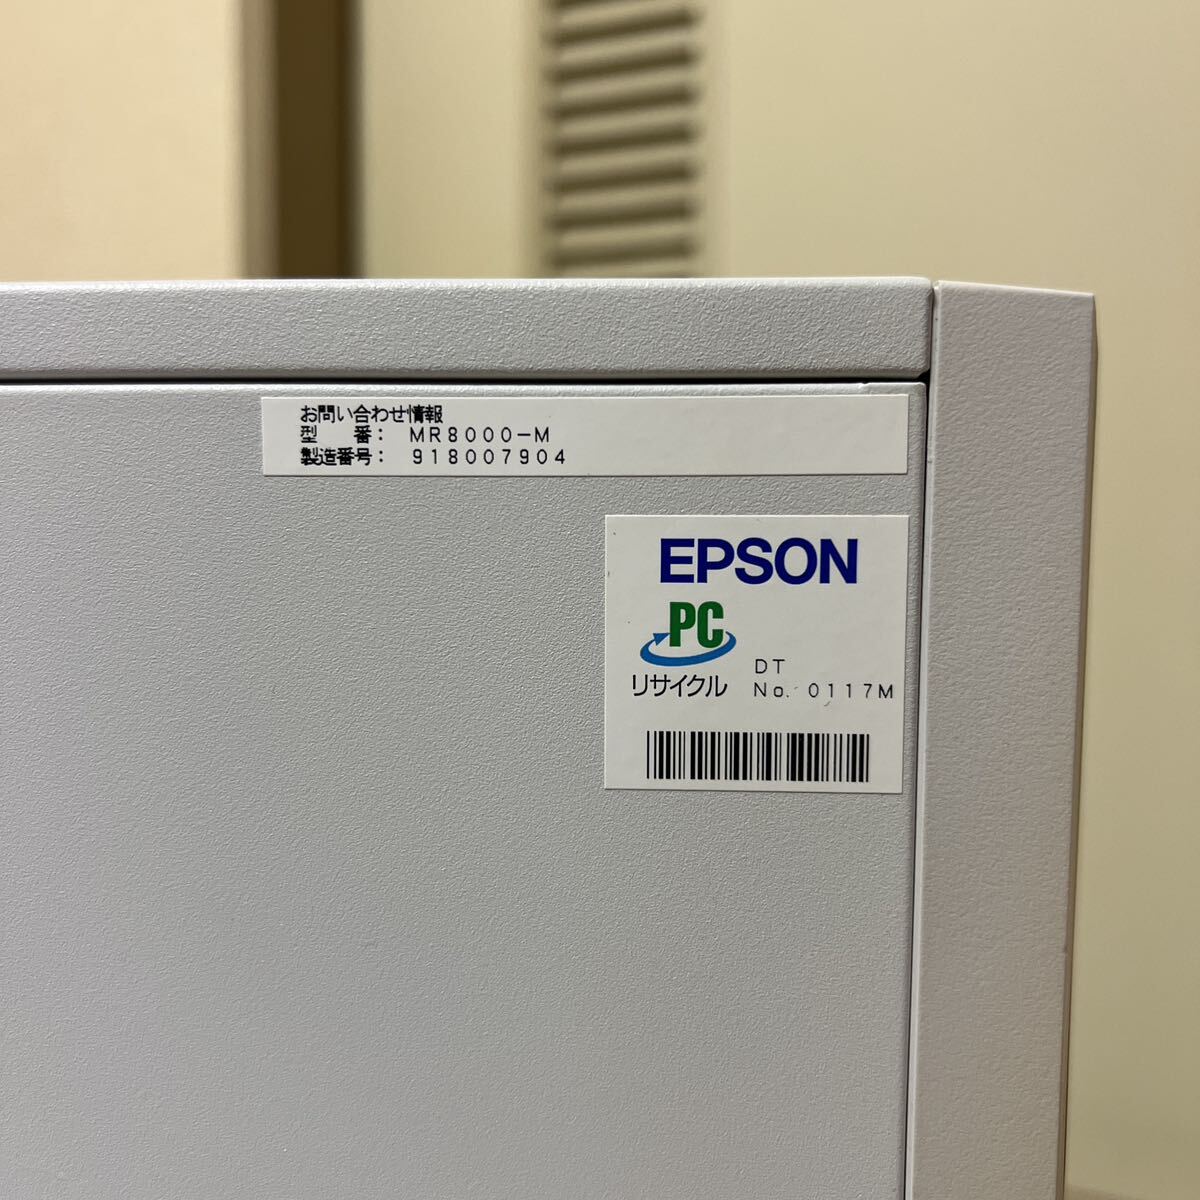 EPSON Endeavor MR8000-M Core i7 7700K 4.20GHz GTX1060 現状品の画像10